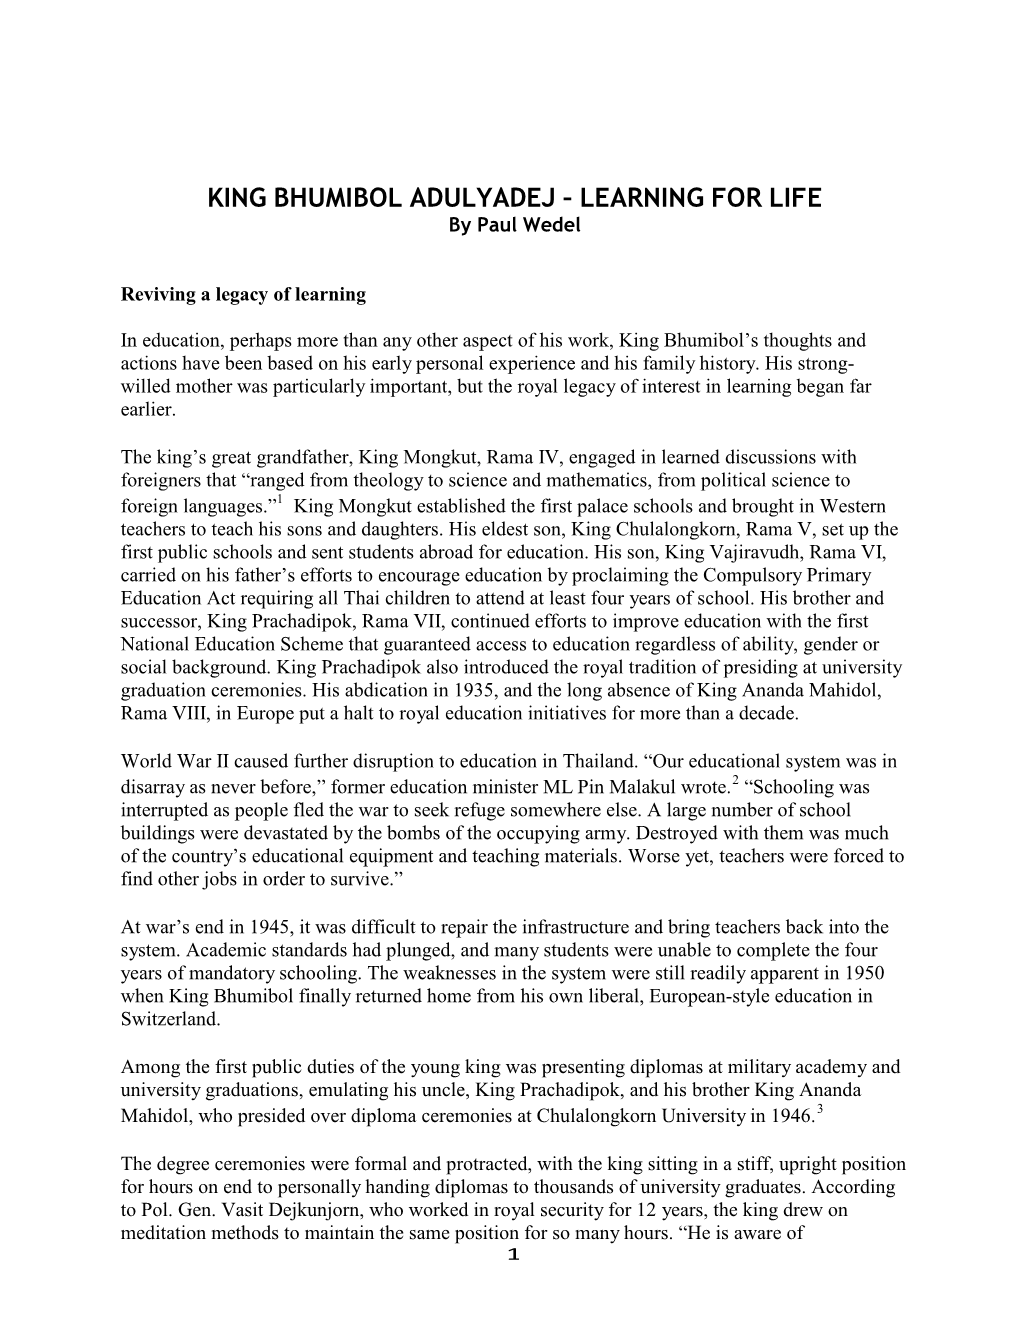 KING BHUMIBOL ADULYADEJ – LEARNING for LIFE by Paul Wedel